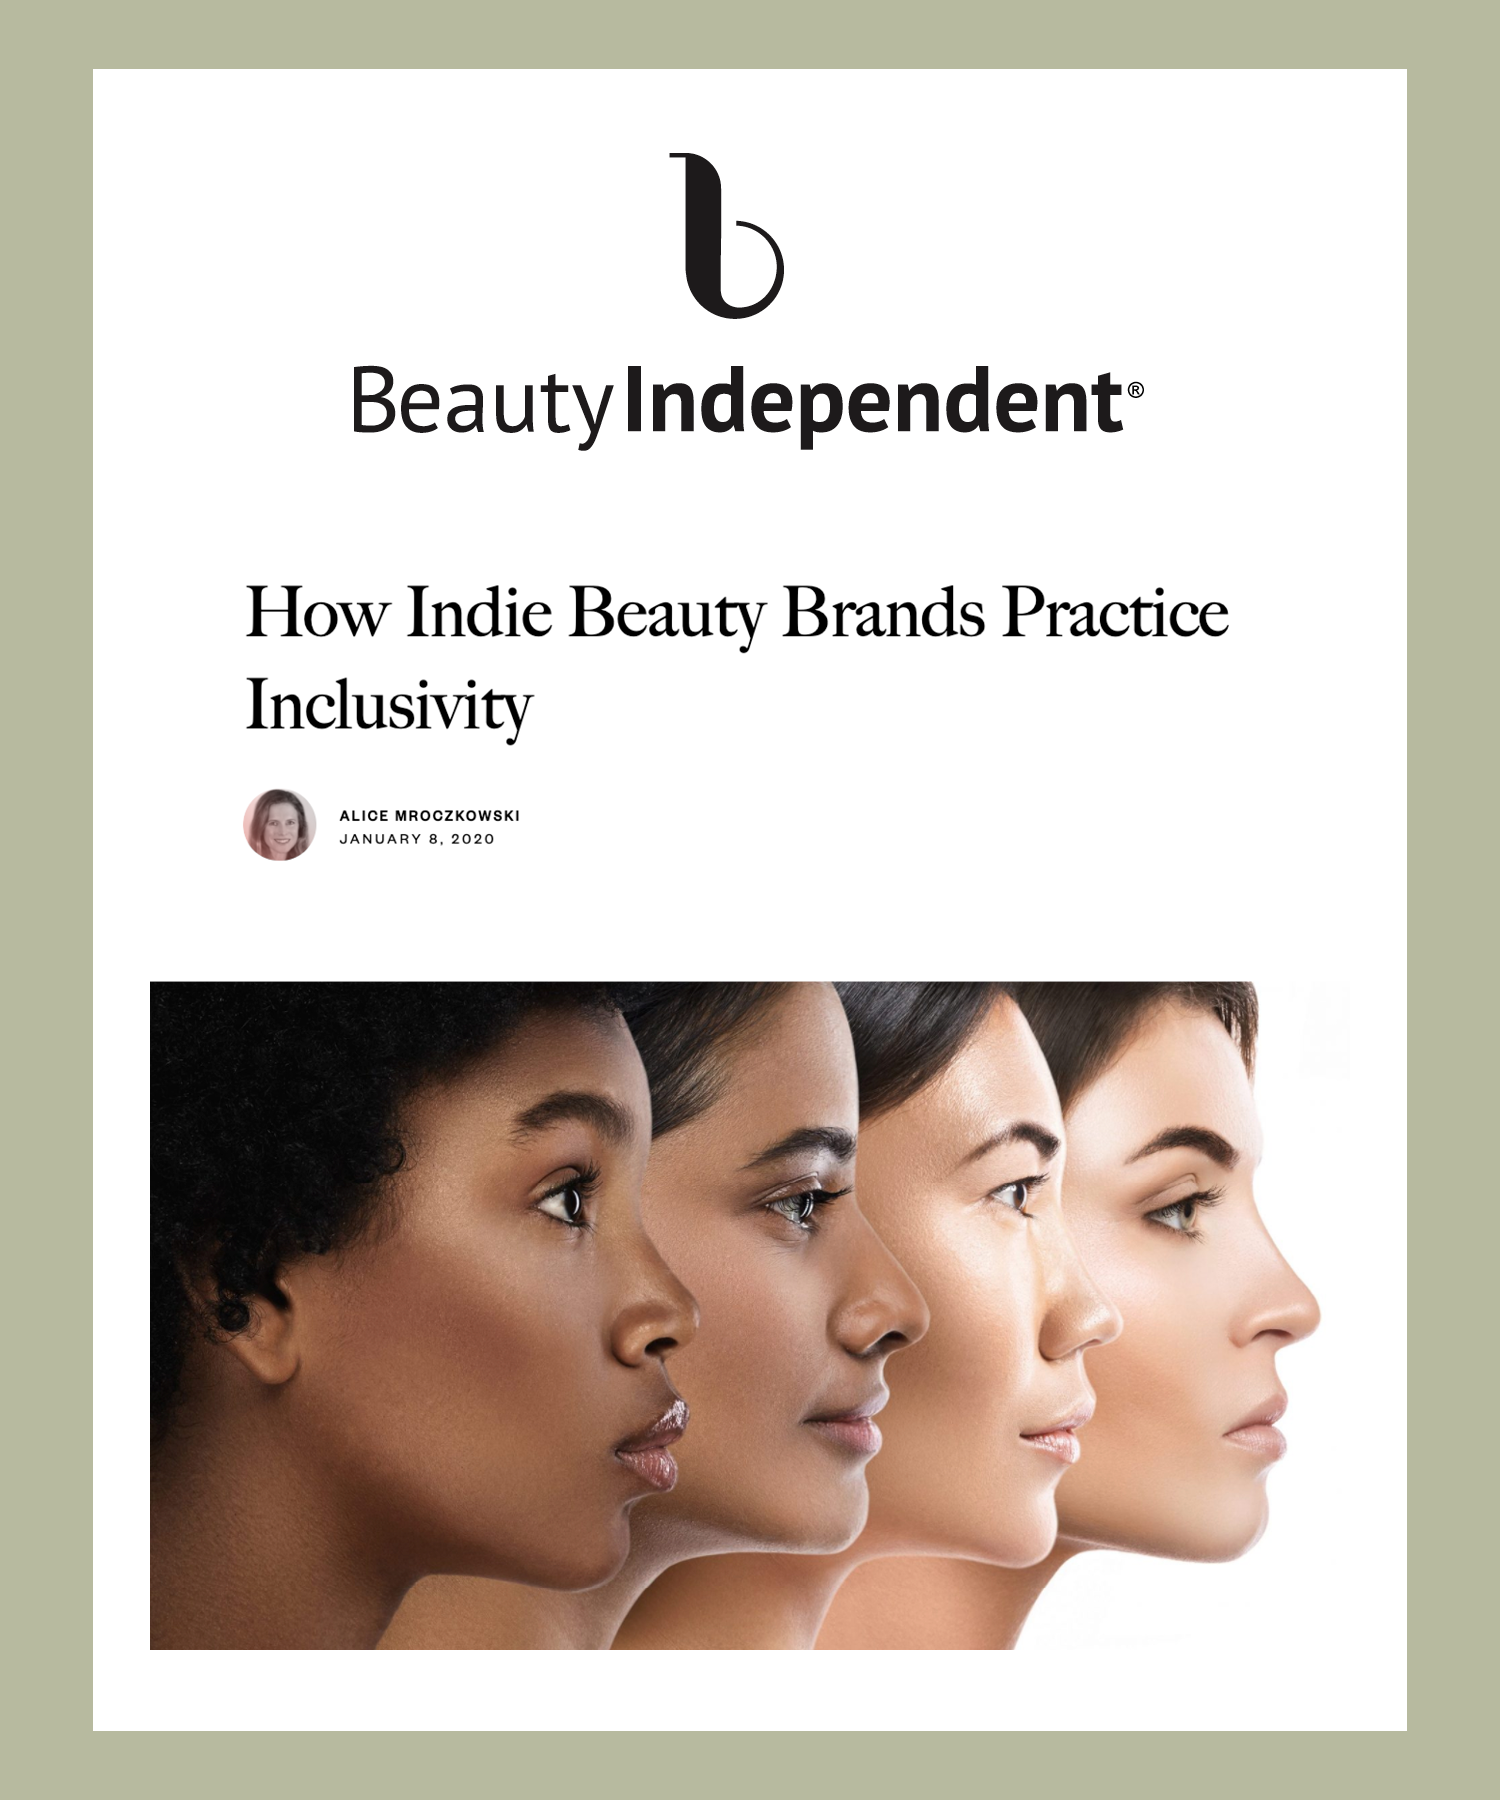 How Beauty Brands Practice Inclusivity